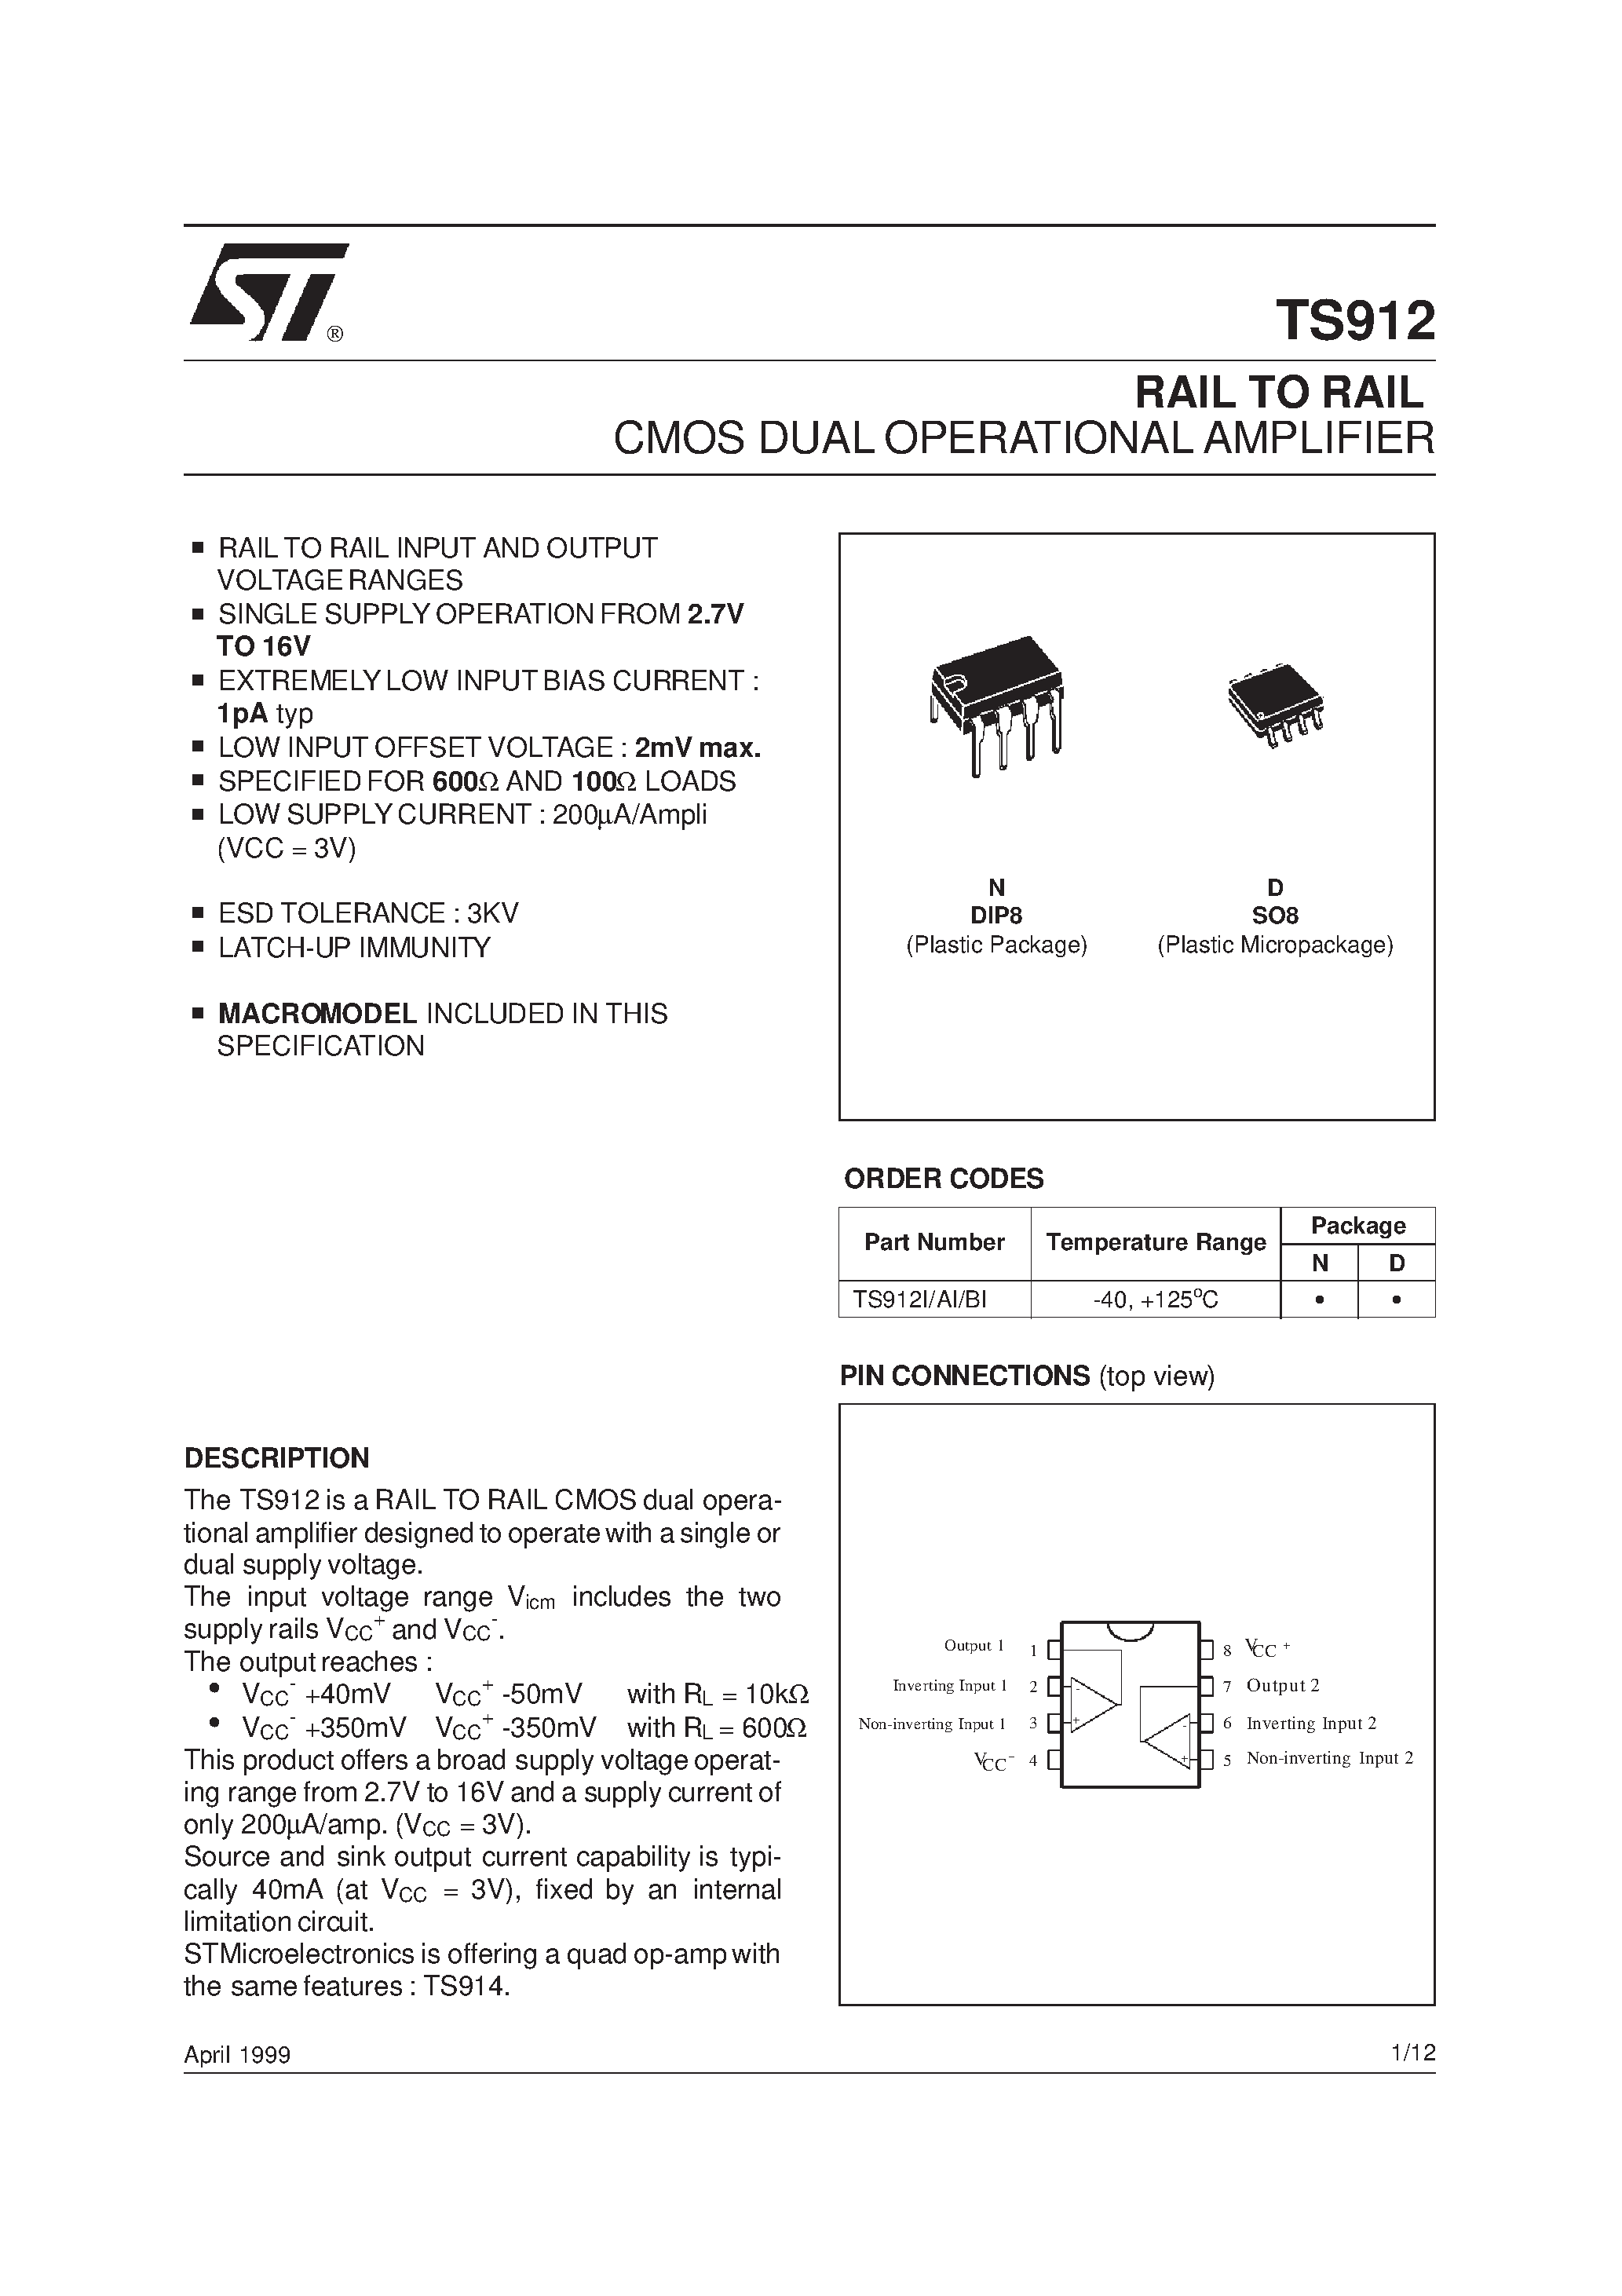 Datasheet TS912 - RAIL TO RAIL CMOS DUAL OPERATIONAL AMPLIFIER page 1